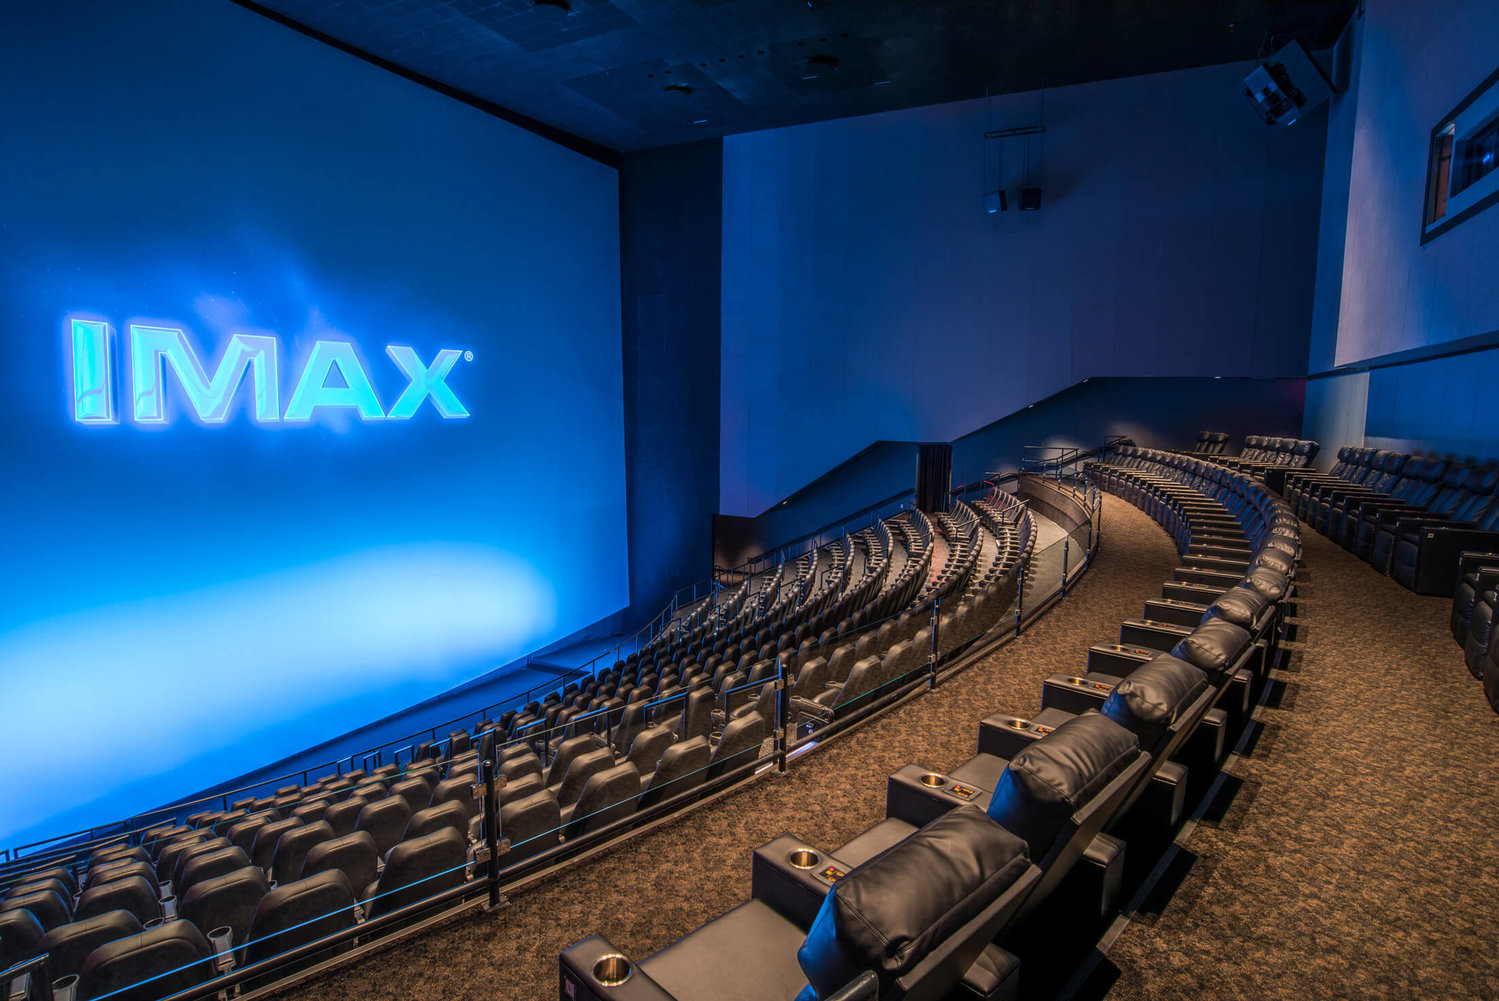 Itec Attractions operates Branson's Imax theater.